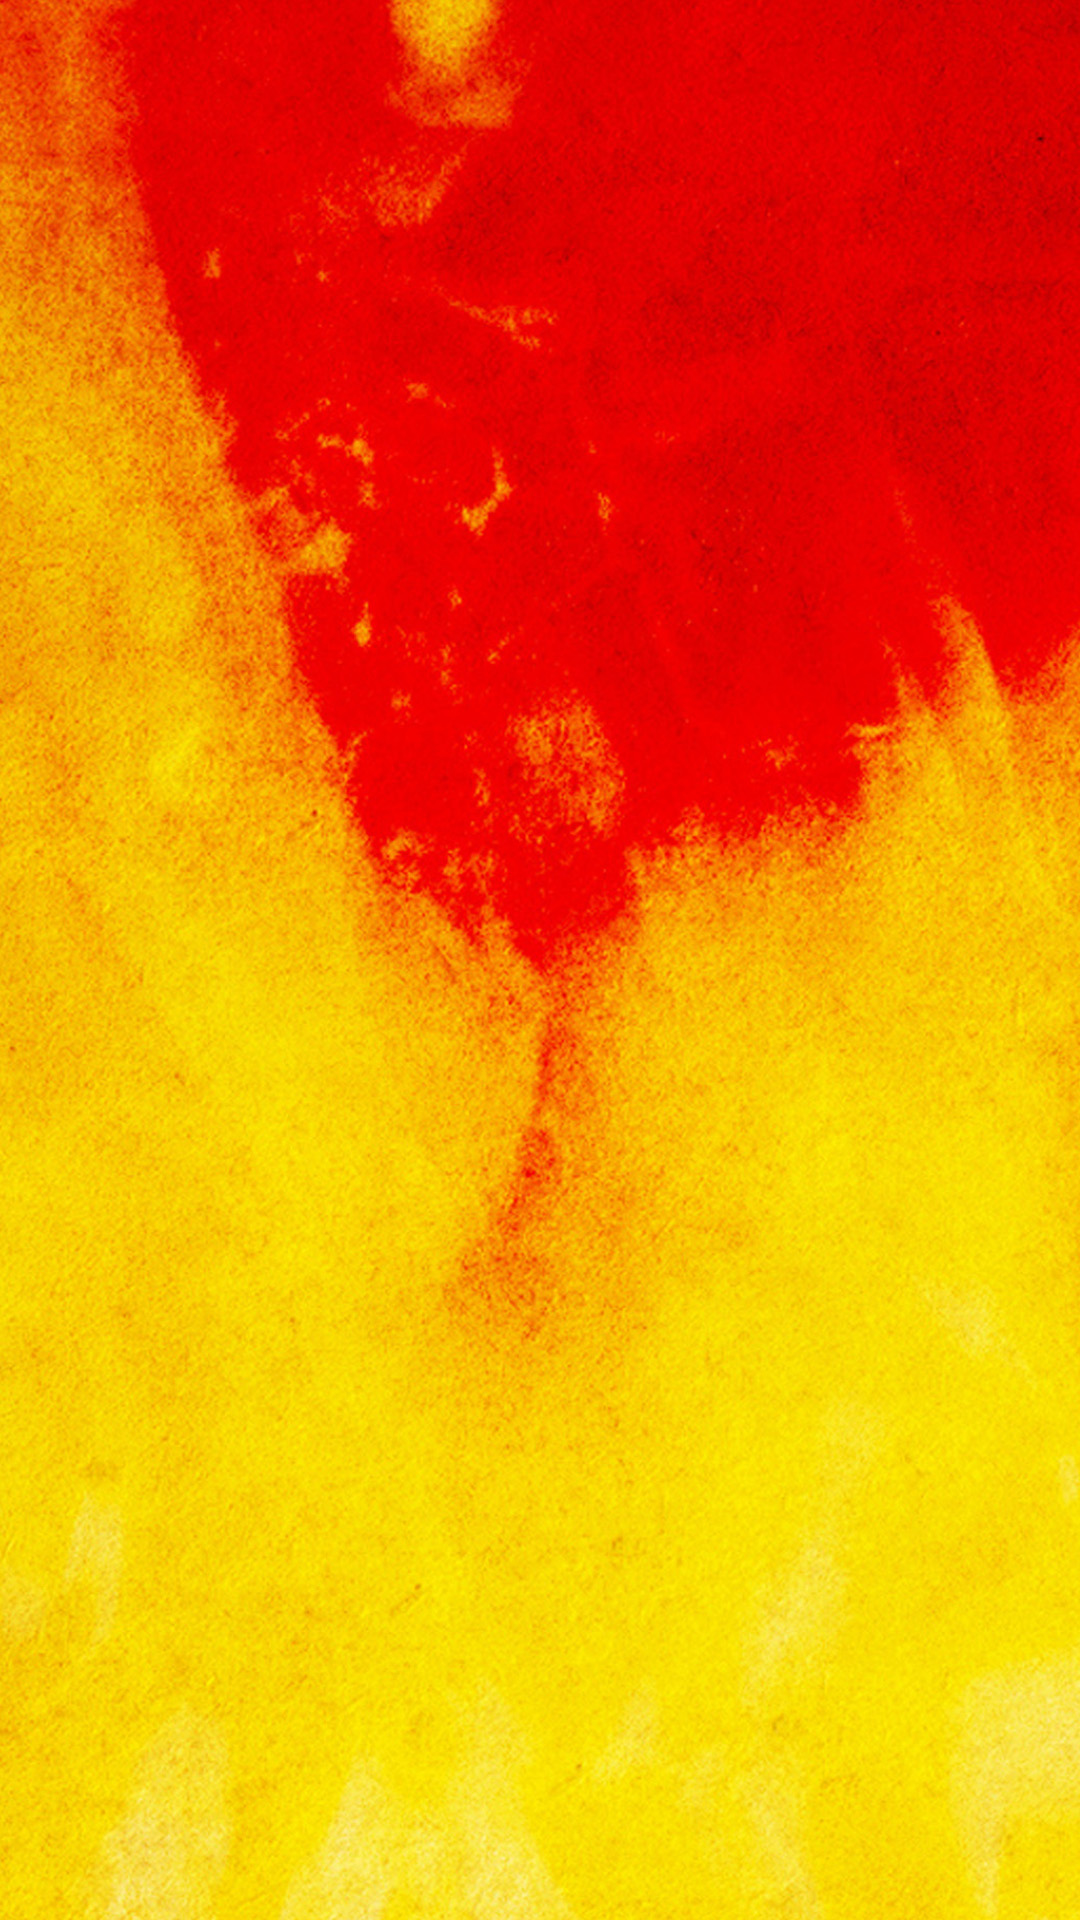 htc m8壁紙,赤,オレンジ,黄,水彩絵の具